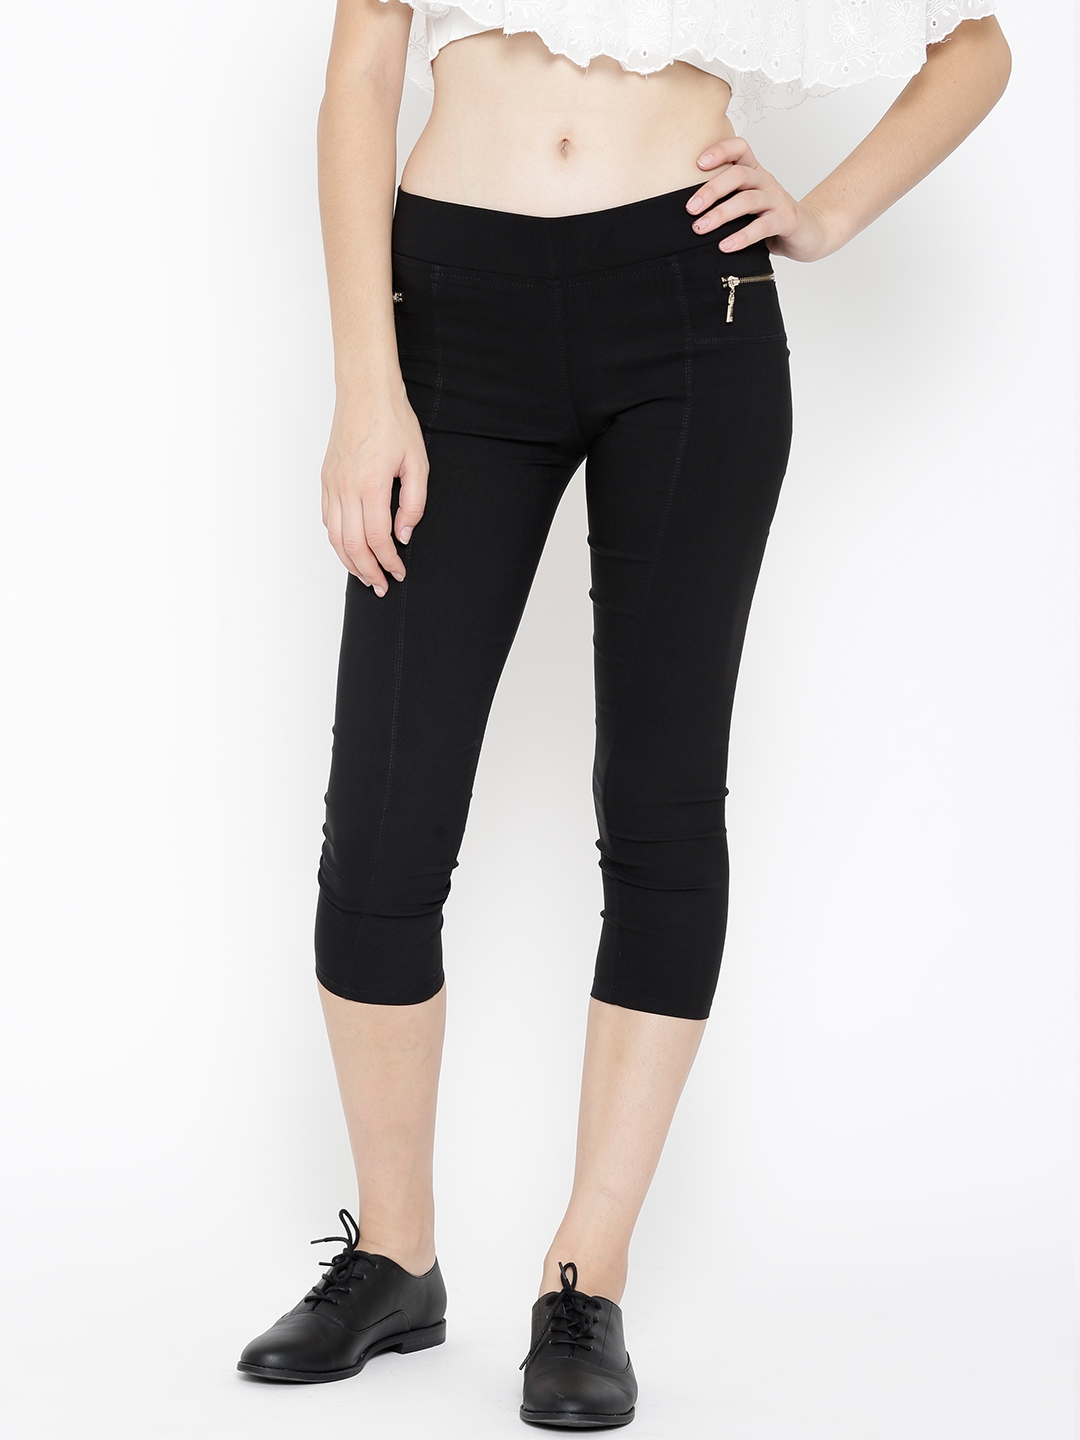 Buy Westwood Black Slim Fit Capris - Capris for Women 1542414 | Myntra